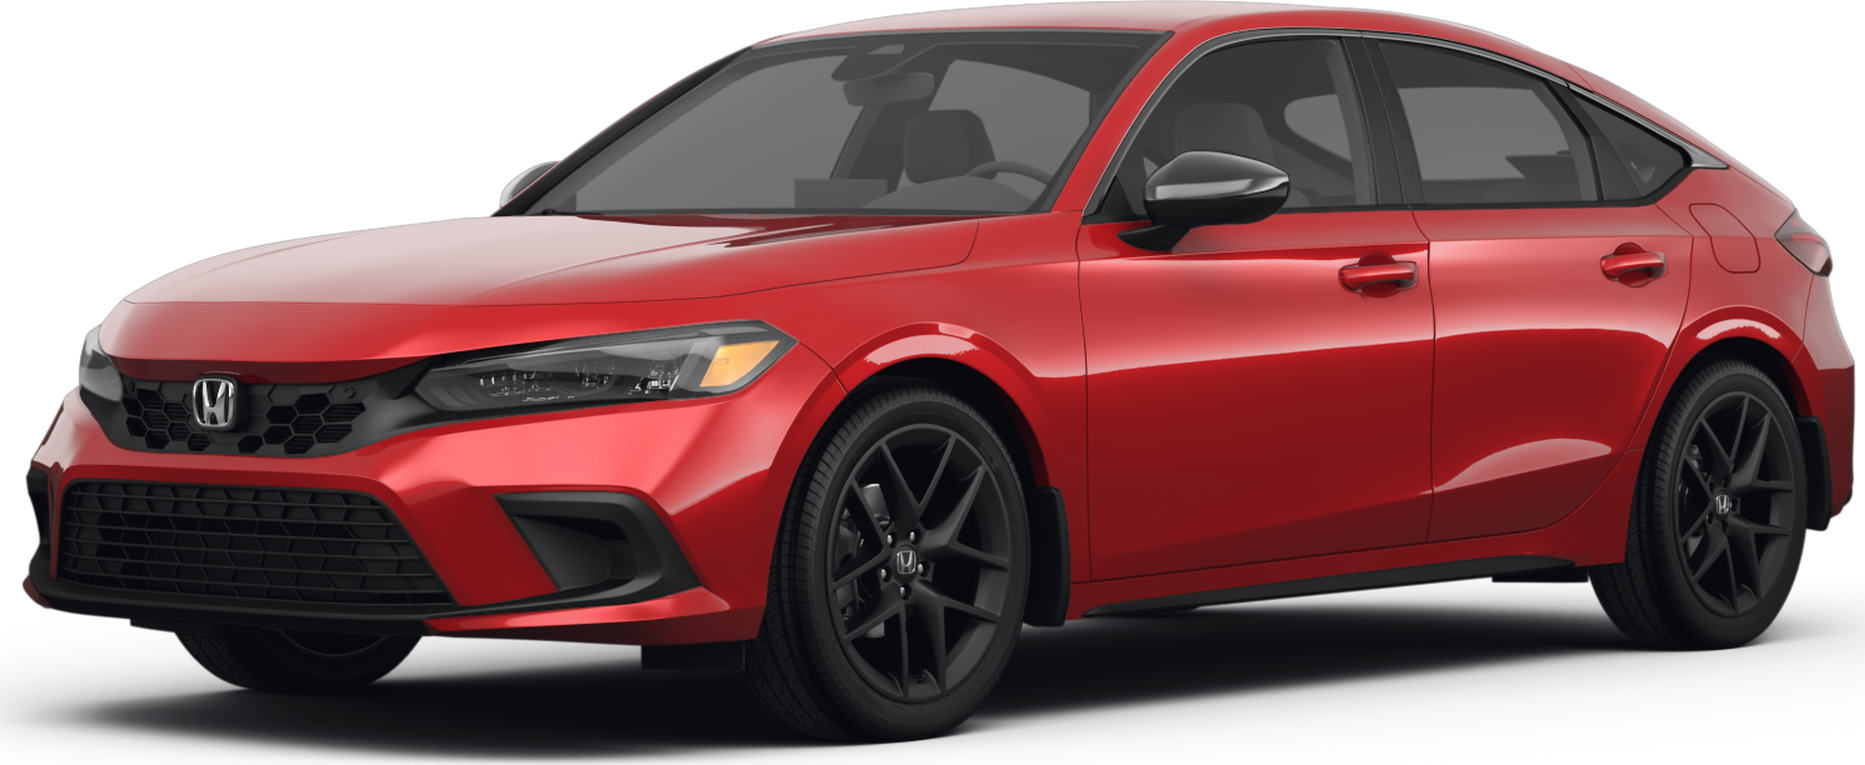 2022 Honda Civic Price Value Ratings And Reviews Kelley Blue Book